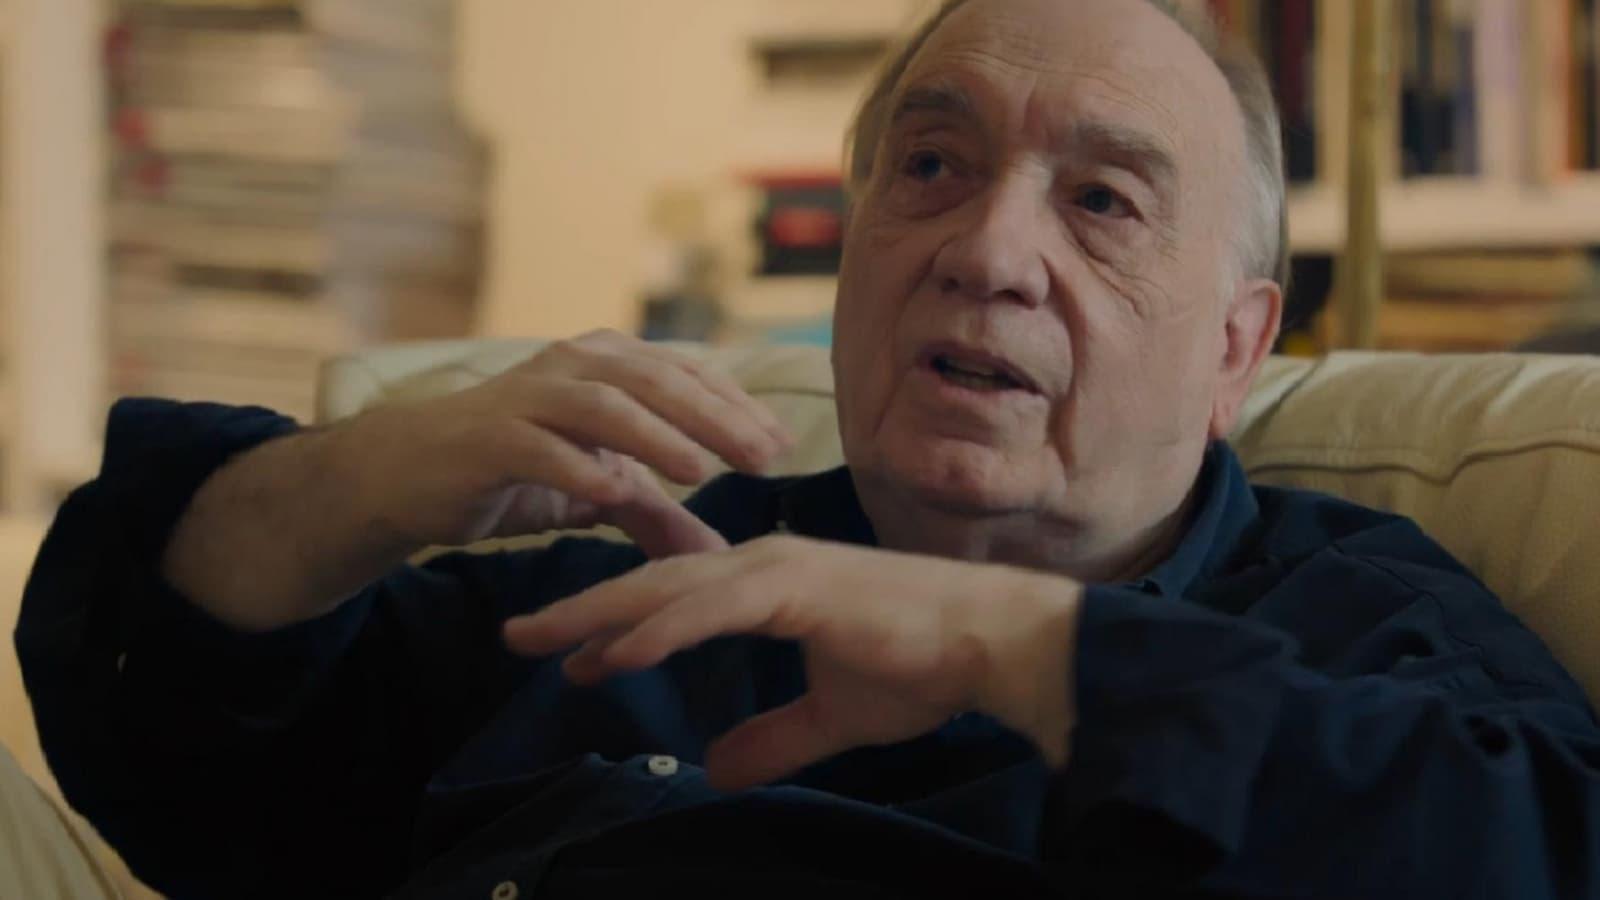 The Memory of Cinema: A Film About Fernando Méndez-Leite